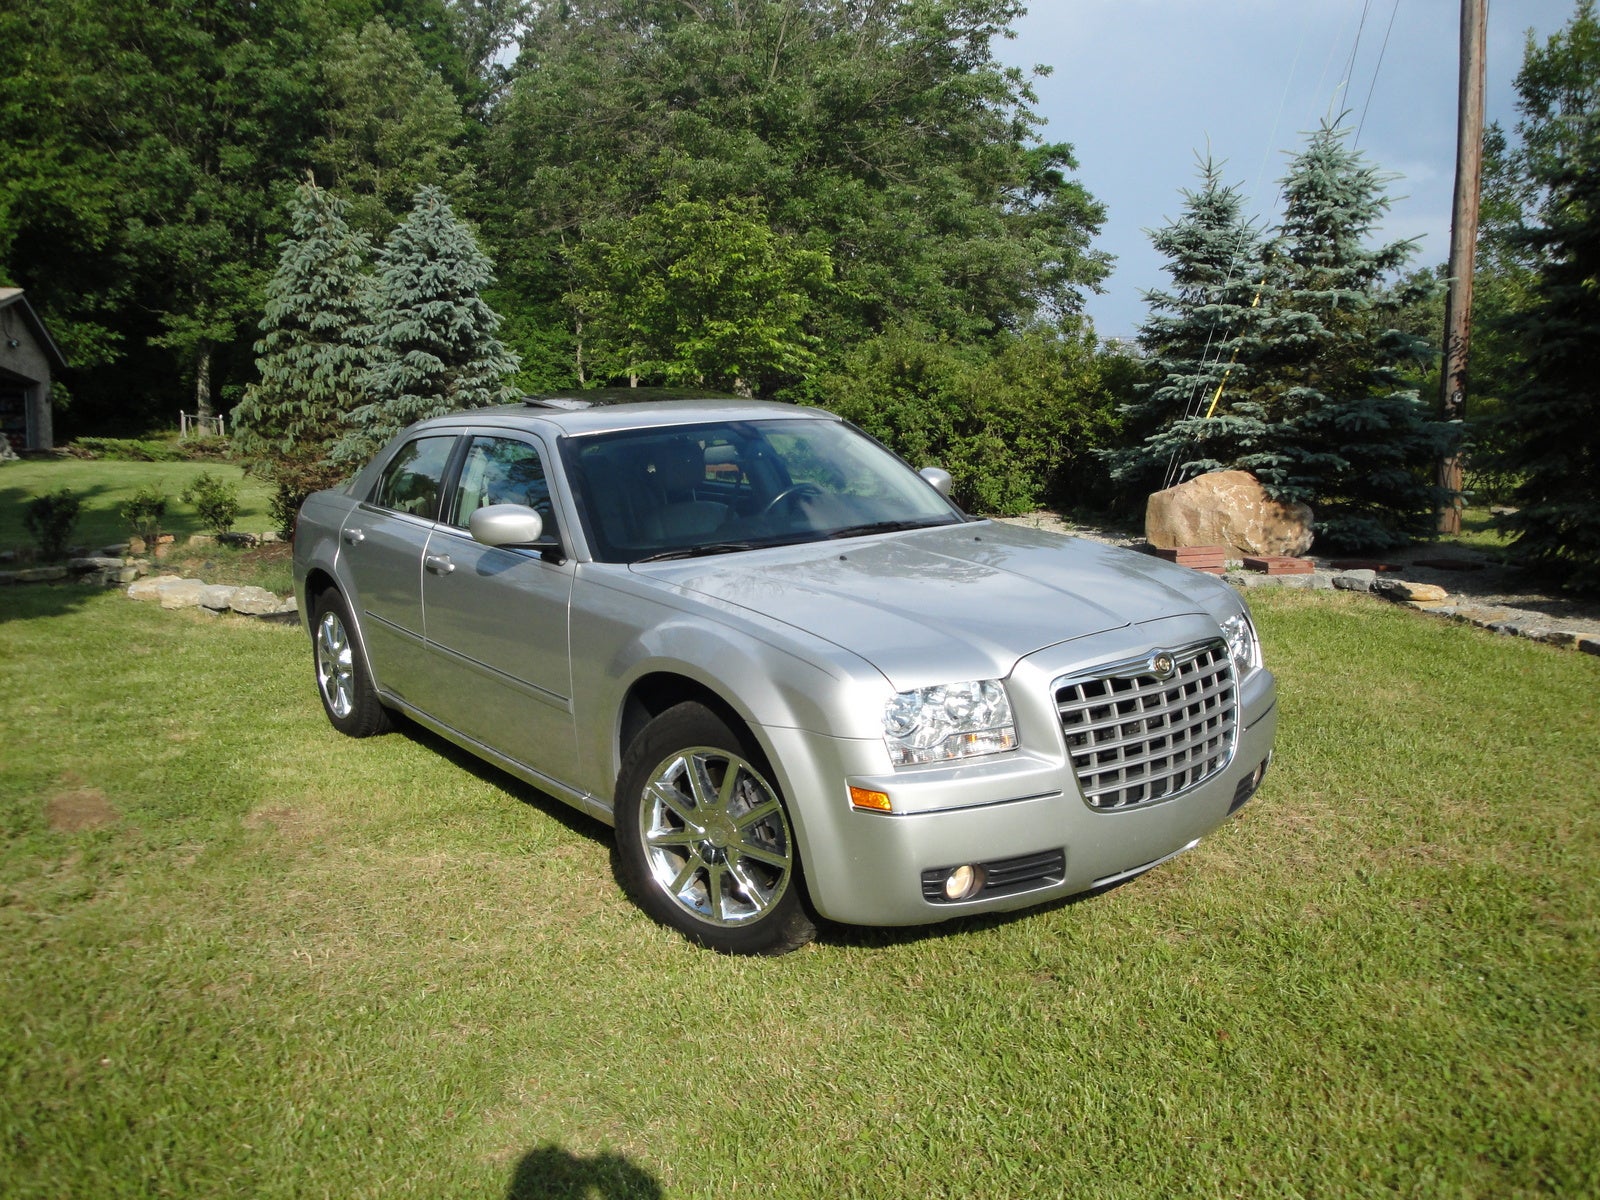 2007 Chrysler 300 fuel economy #3